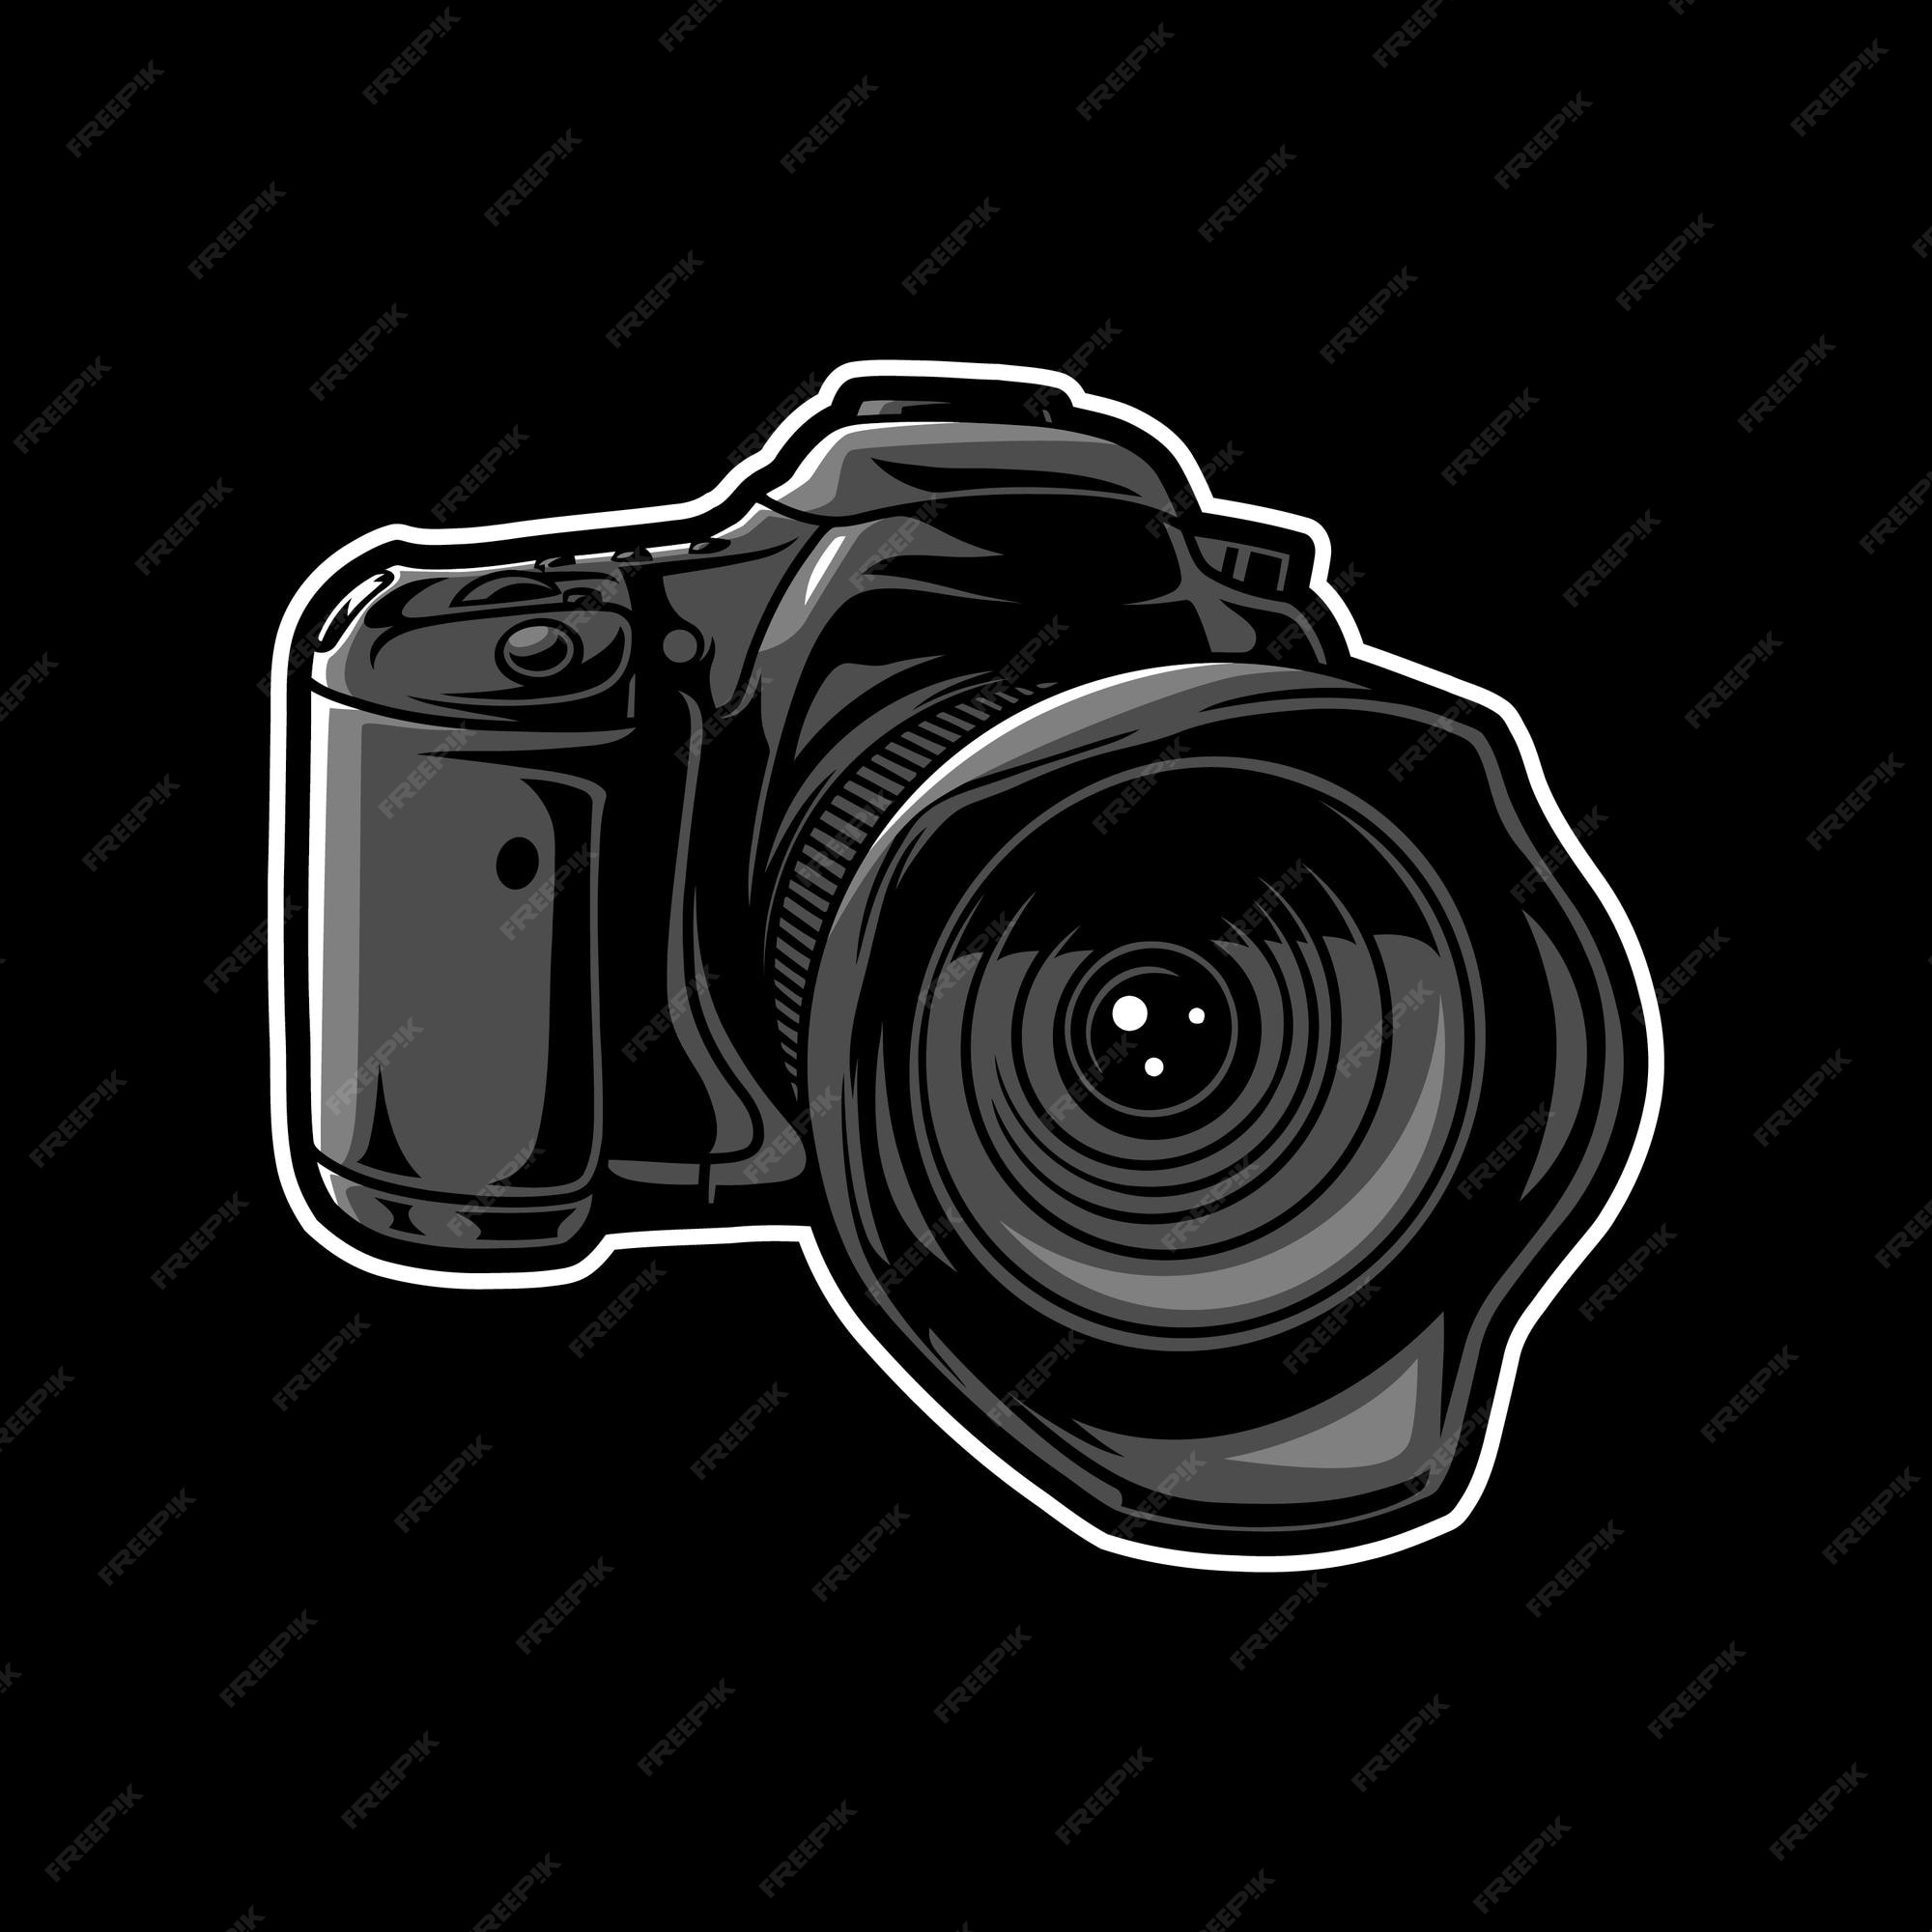 Premium Vector | Dslr camera logo design illustration